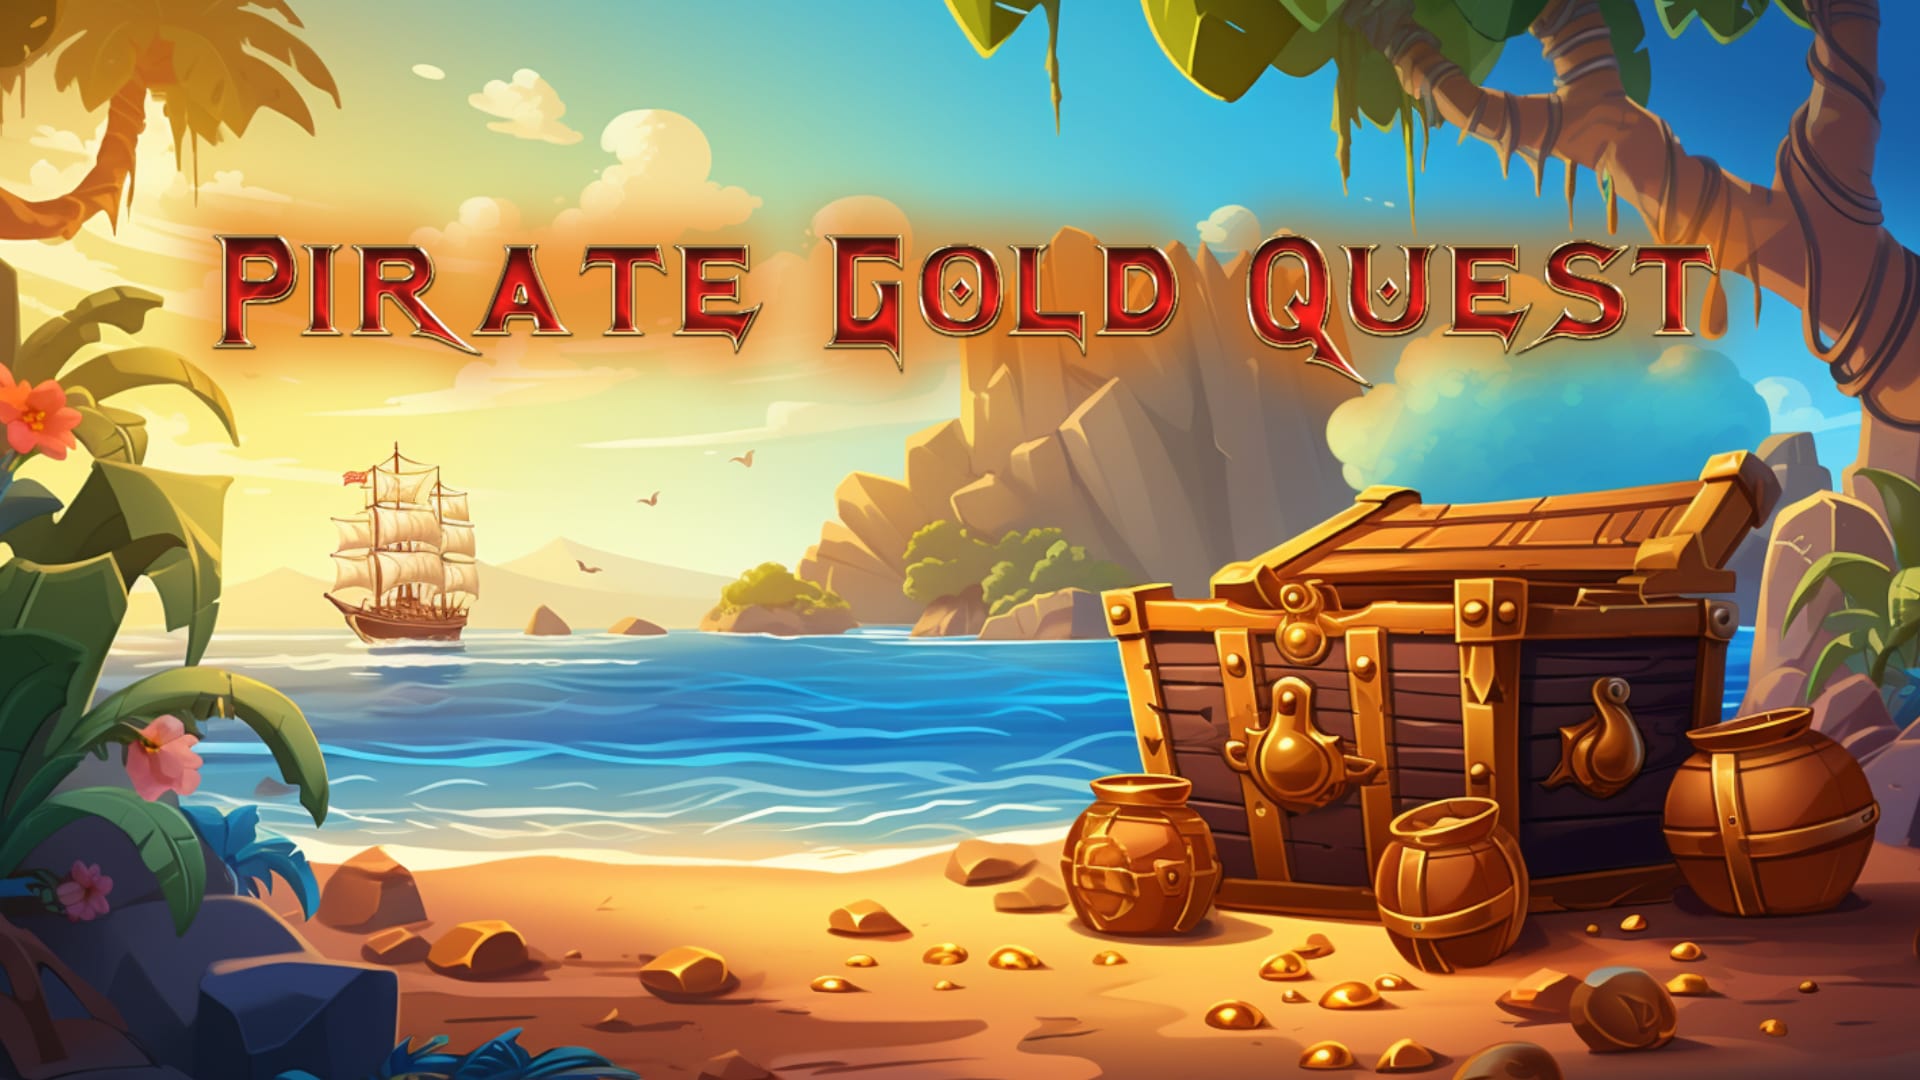 Pirates Golden Quest 1